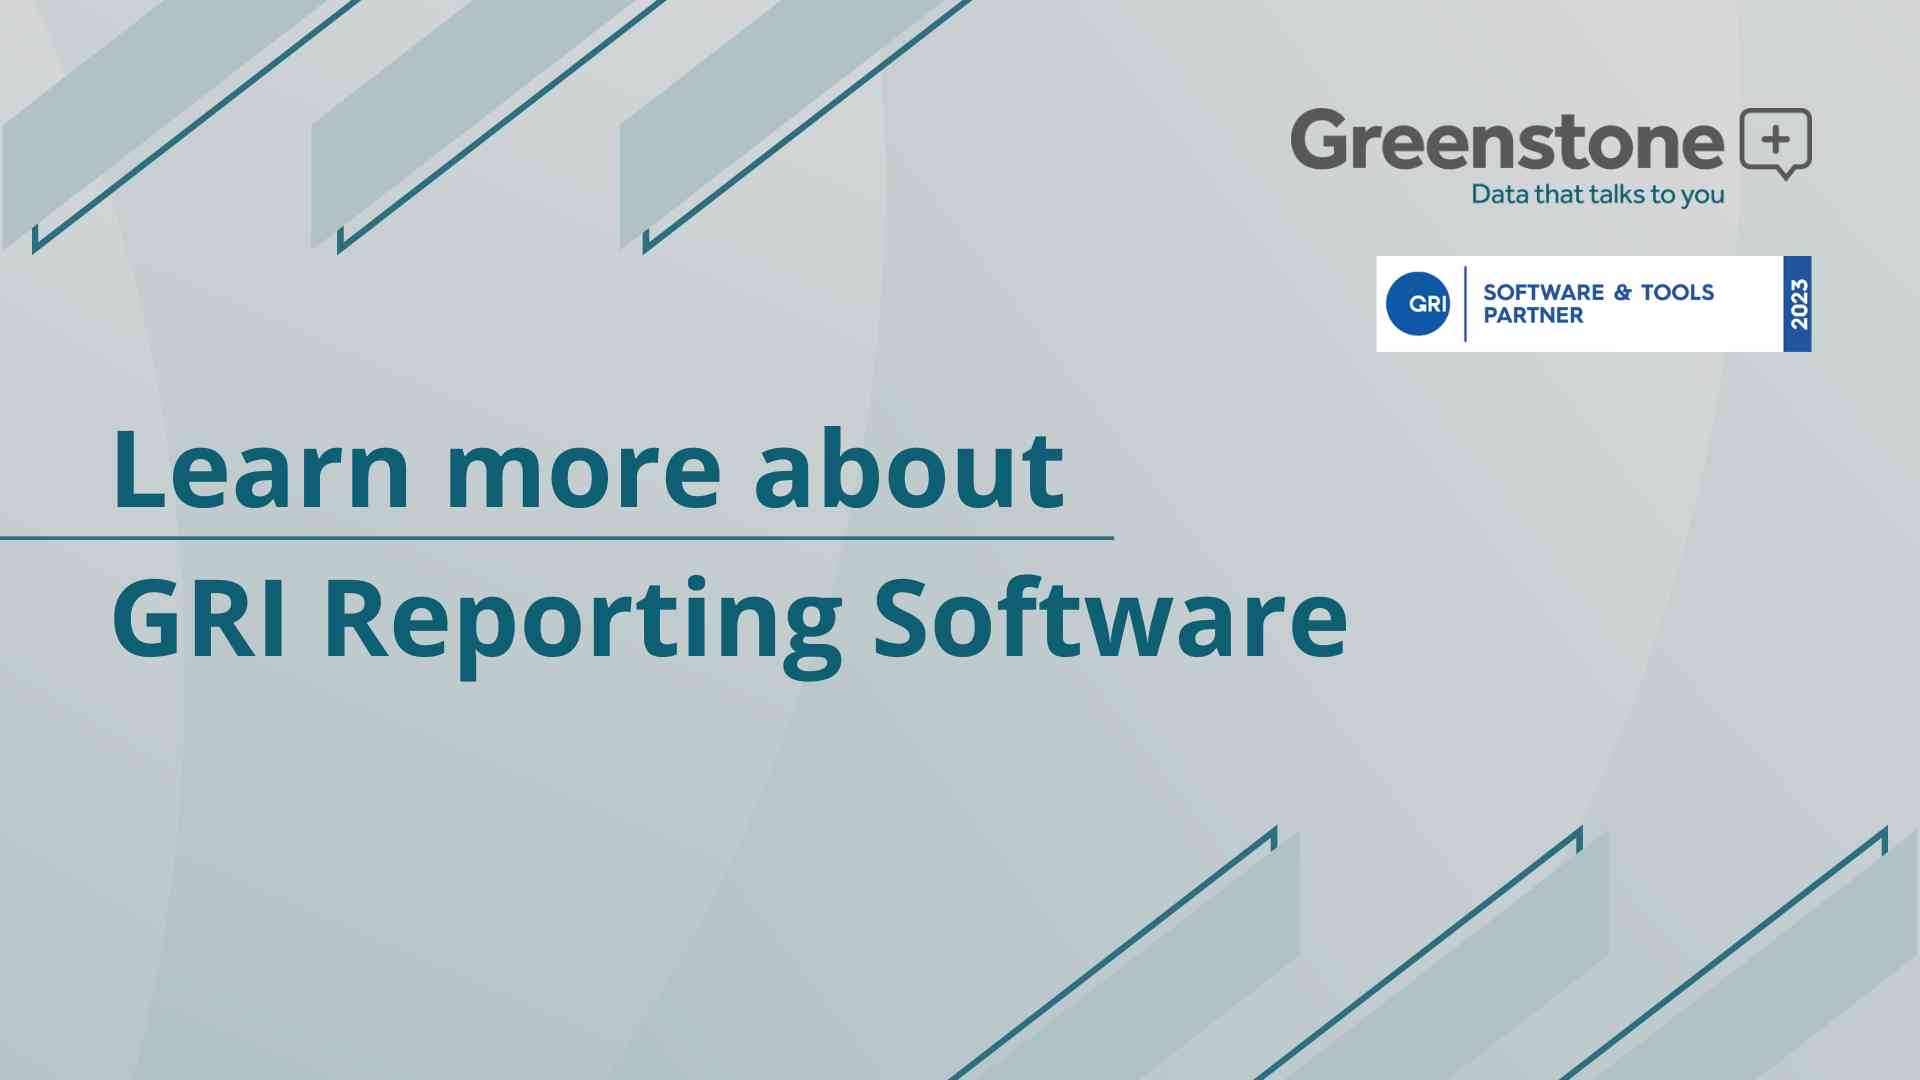 Greenstone & GRI Reporting Software